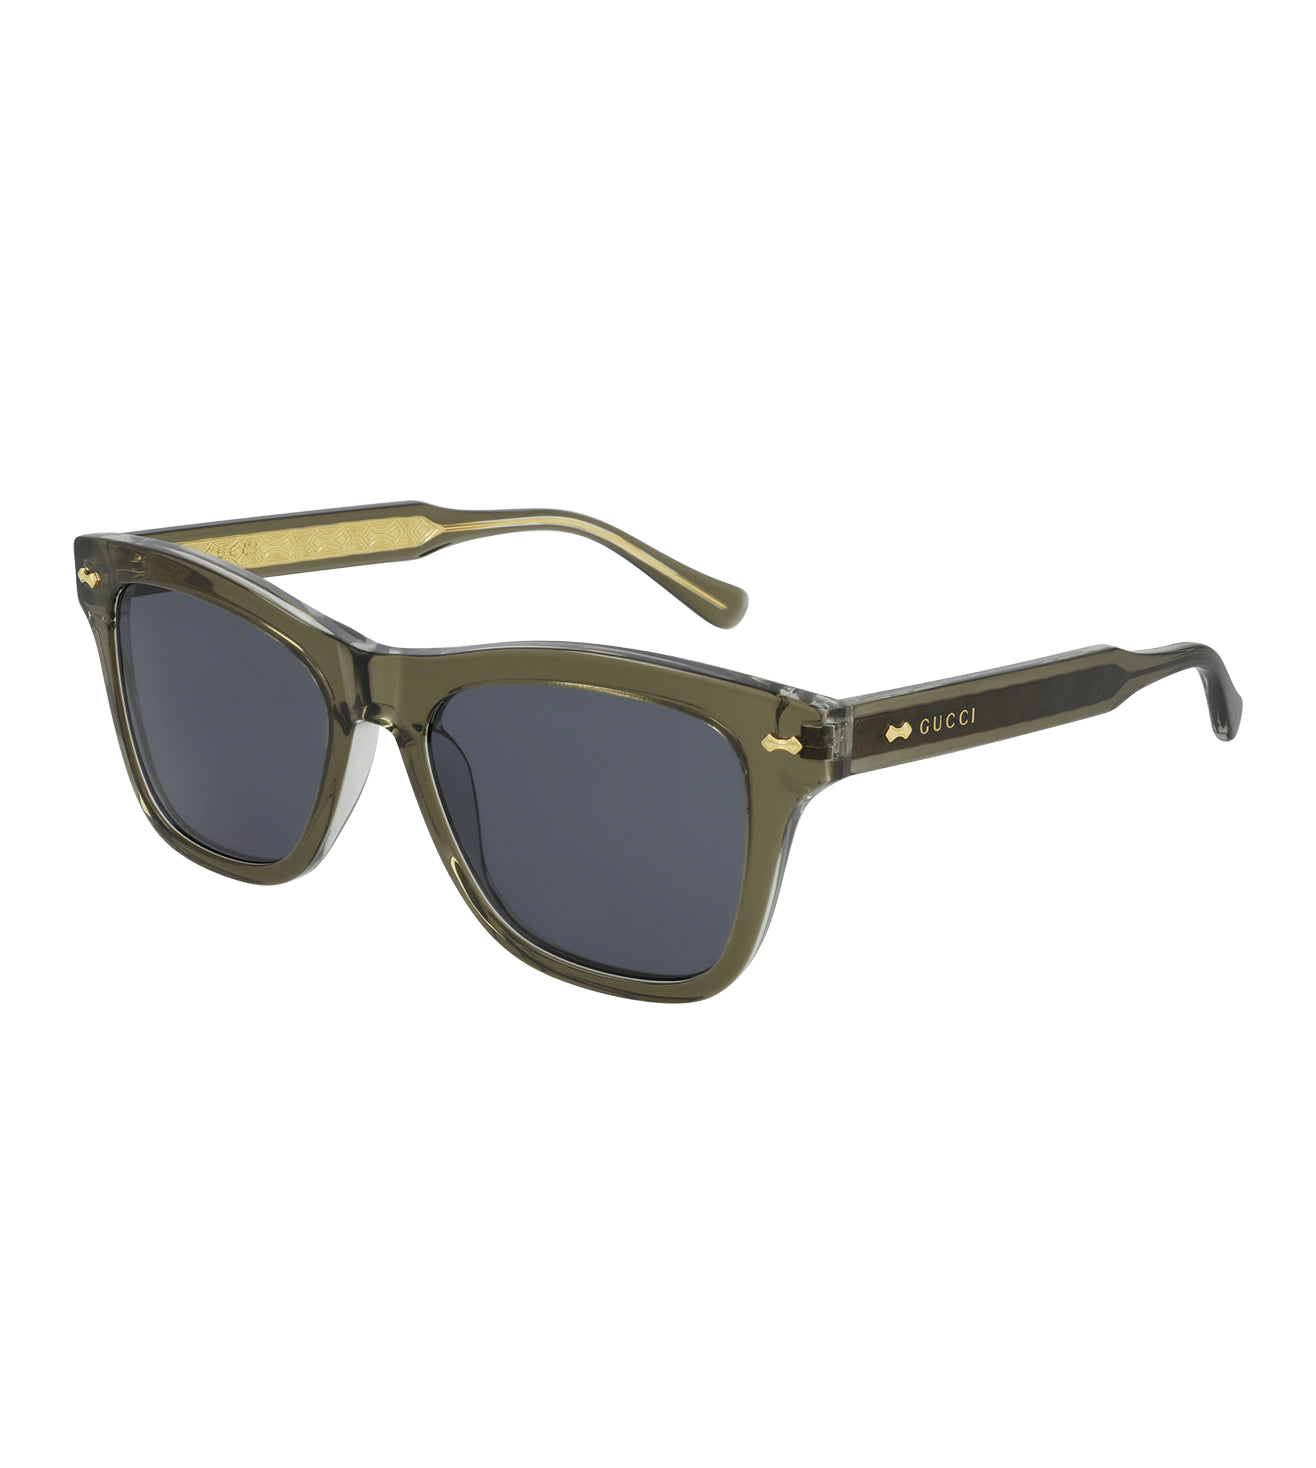 Gucci Men's Blue Rectangular Sunglasses